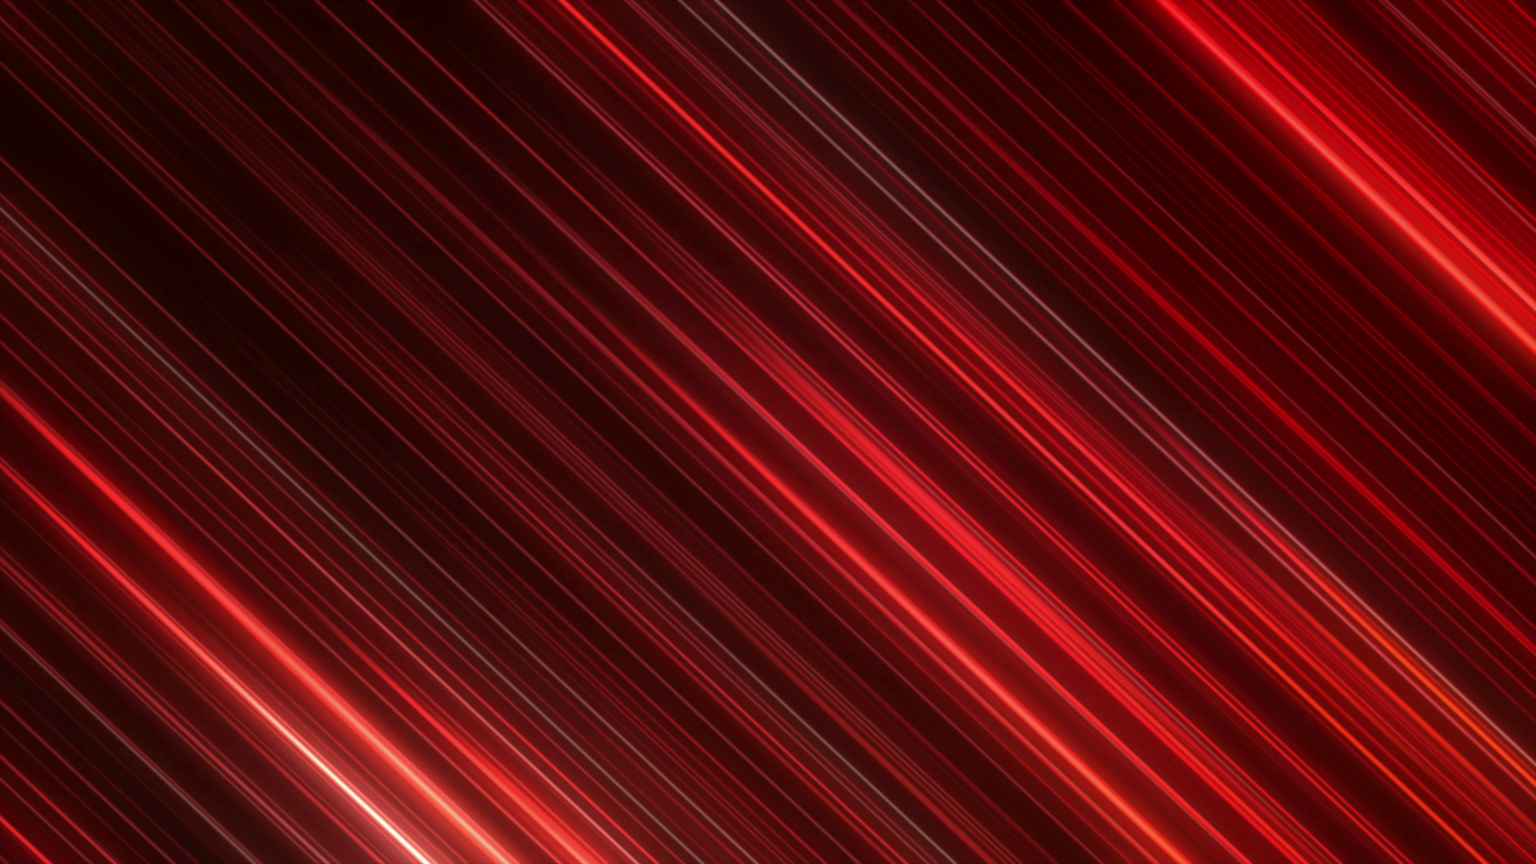 4K Red & Orange Lines Motion Background || VFX Free To Use Screensaver || FREE DOWNLOAD